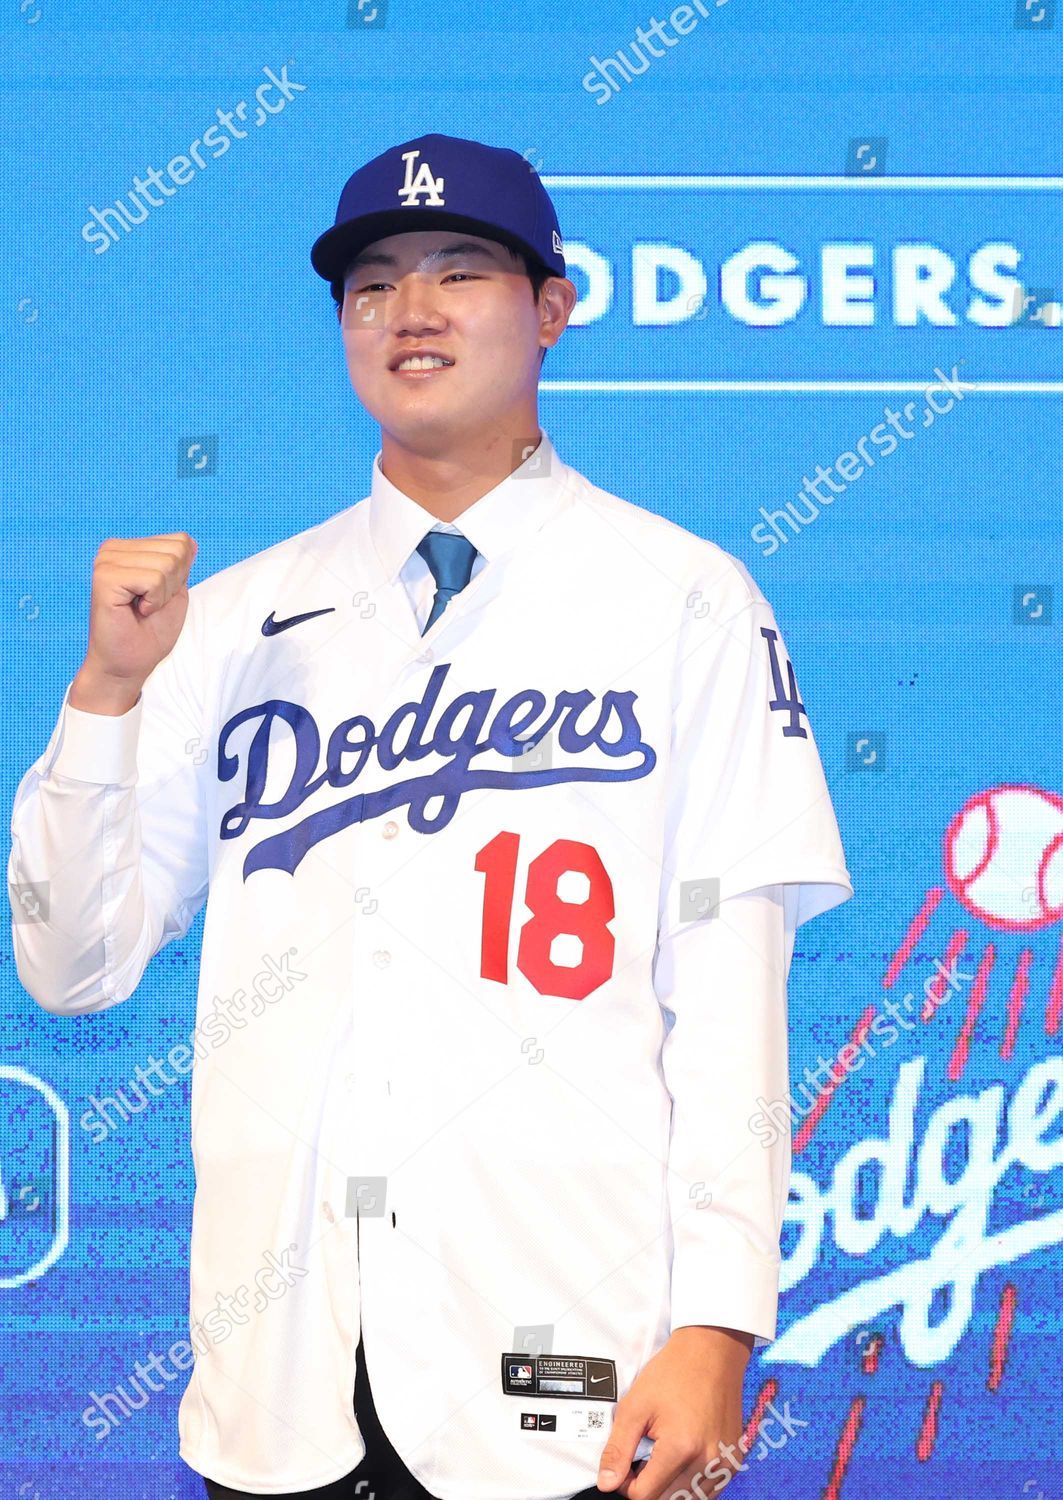 S. Korean high school pitcher Jang Hyun-seok formally introduced